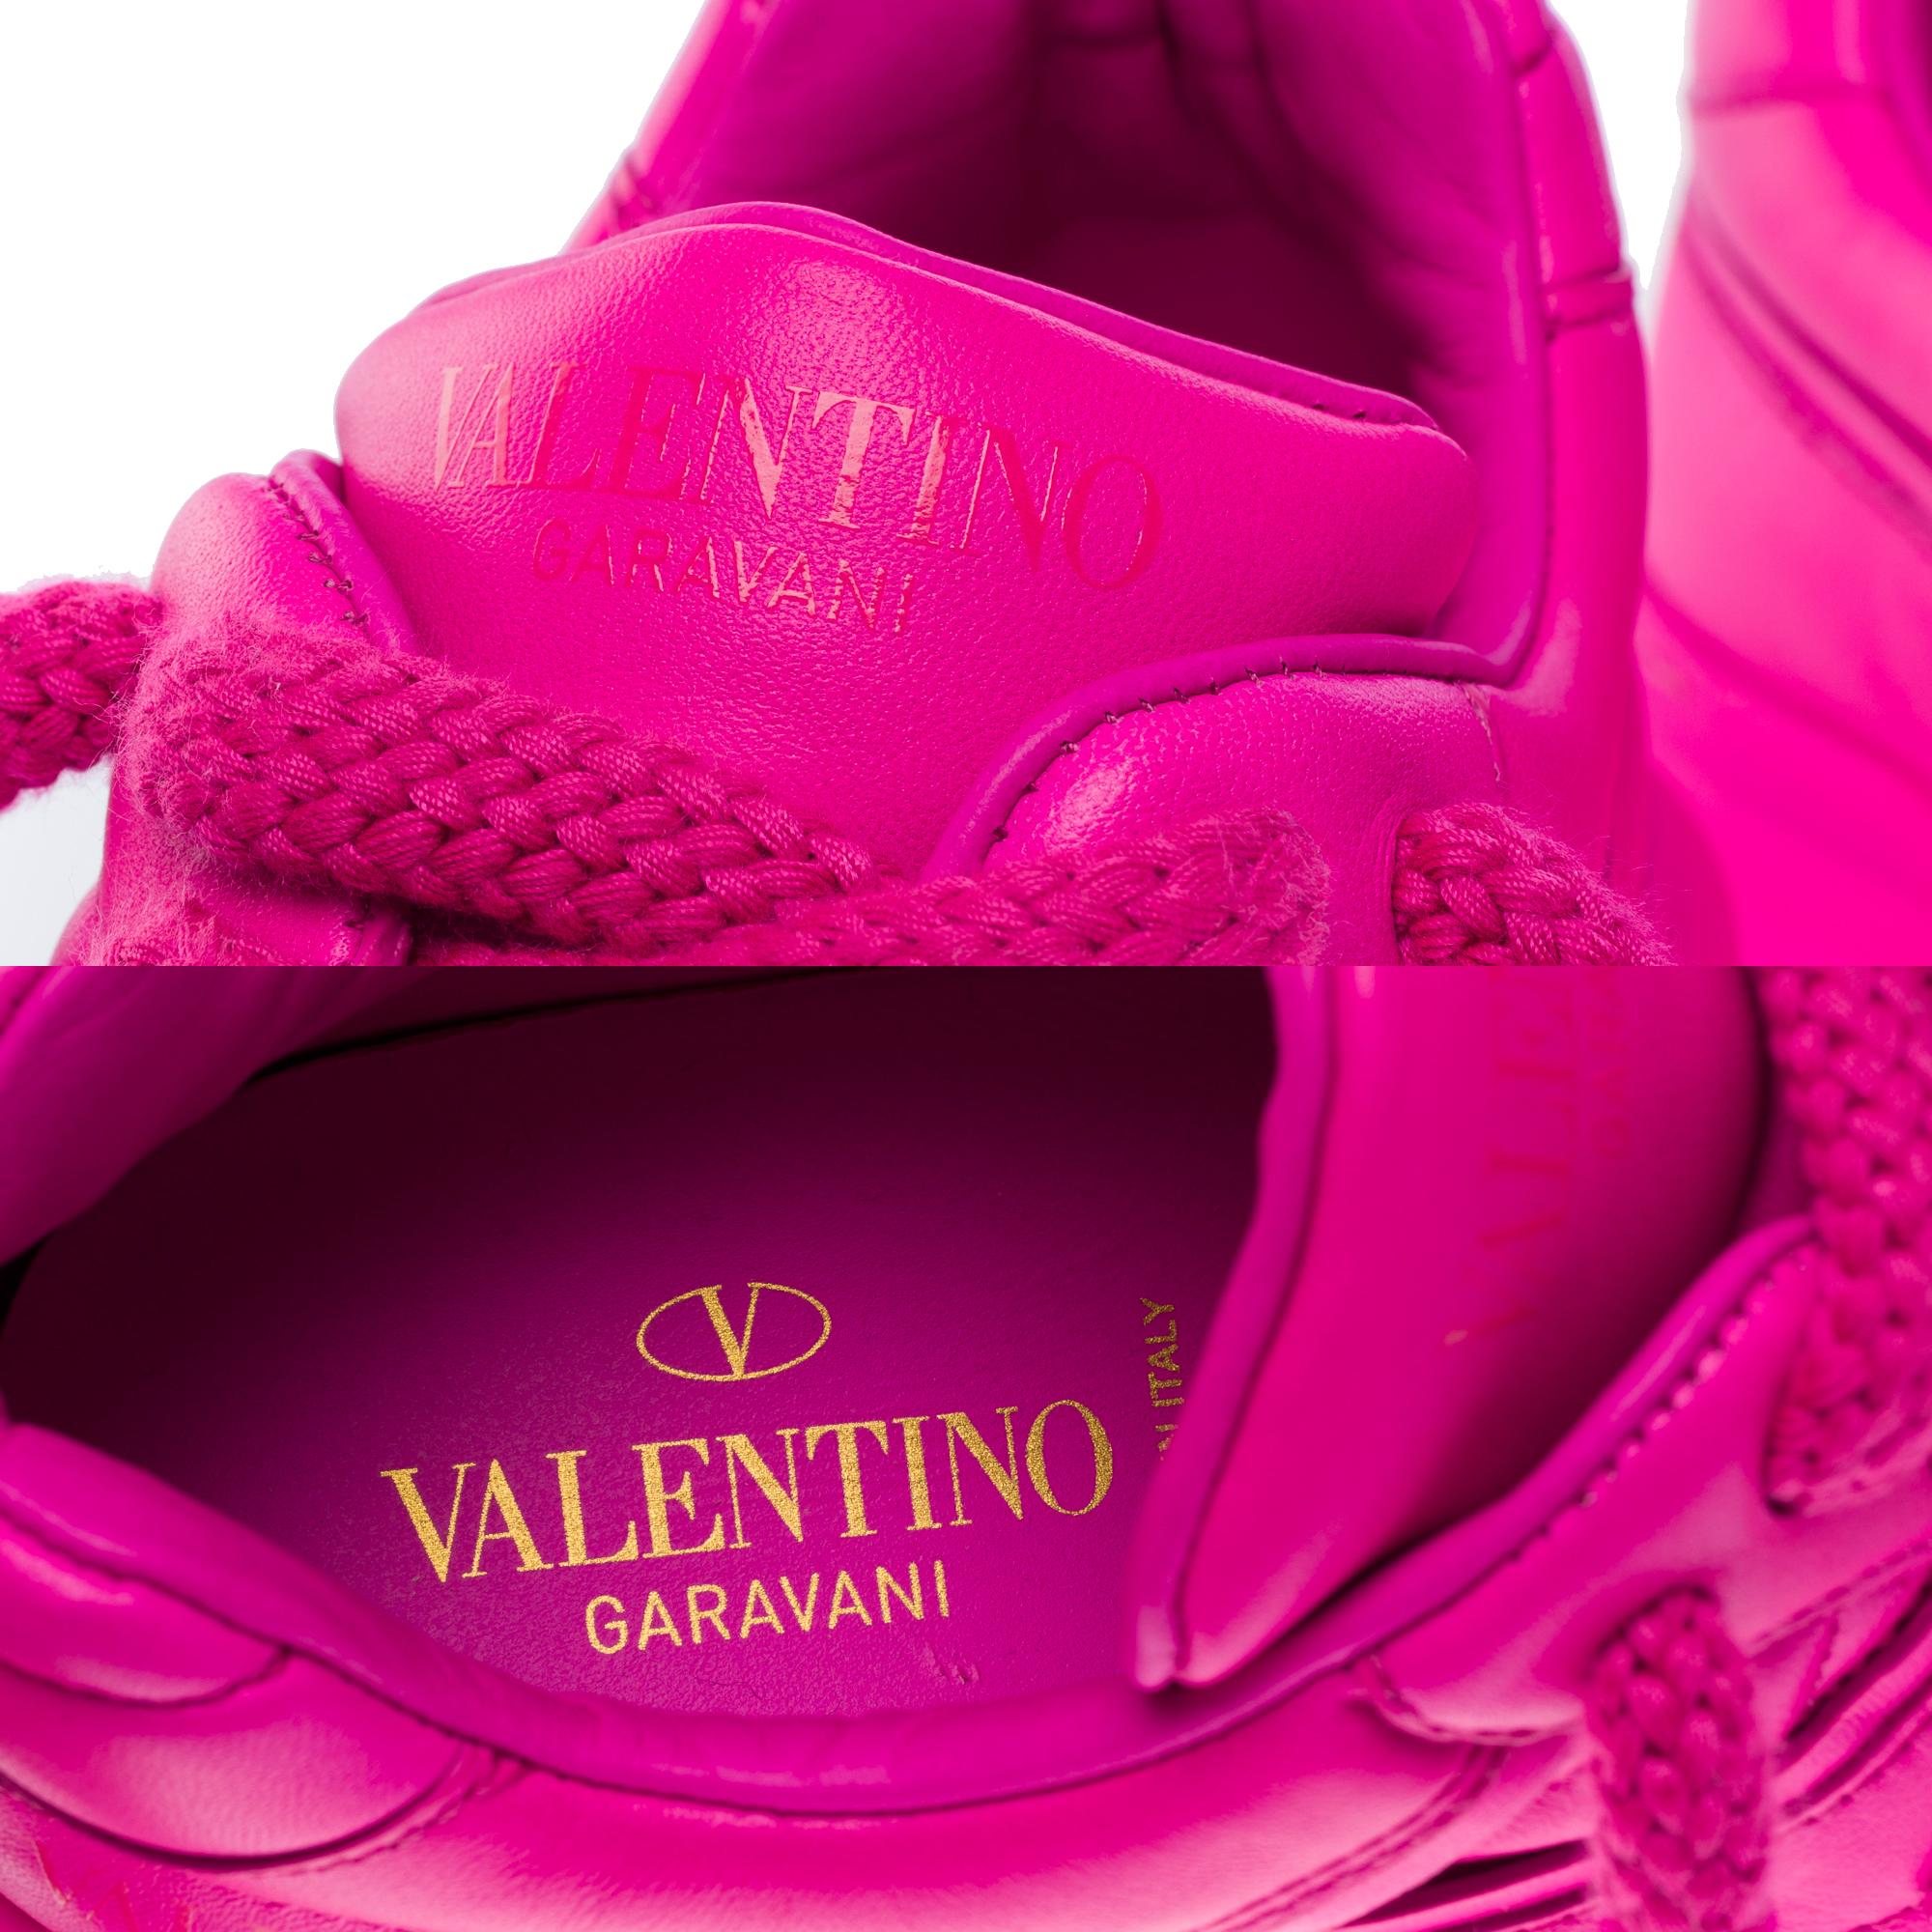 New Valentino Garavani ONE STUD XL Women Sneakers in Pink leather, Size 39 4